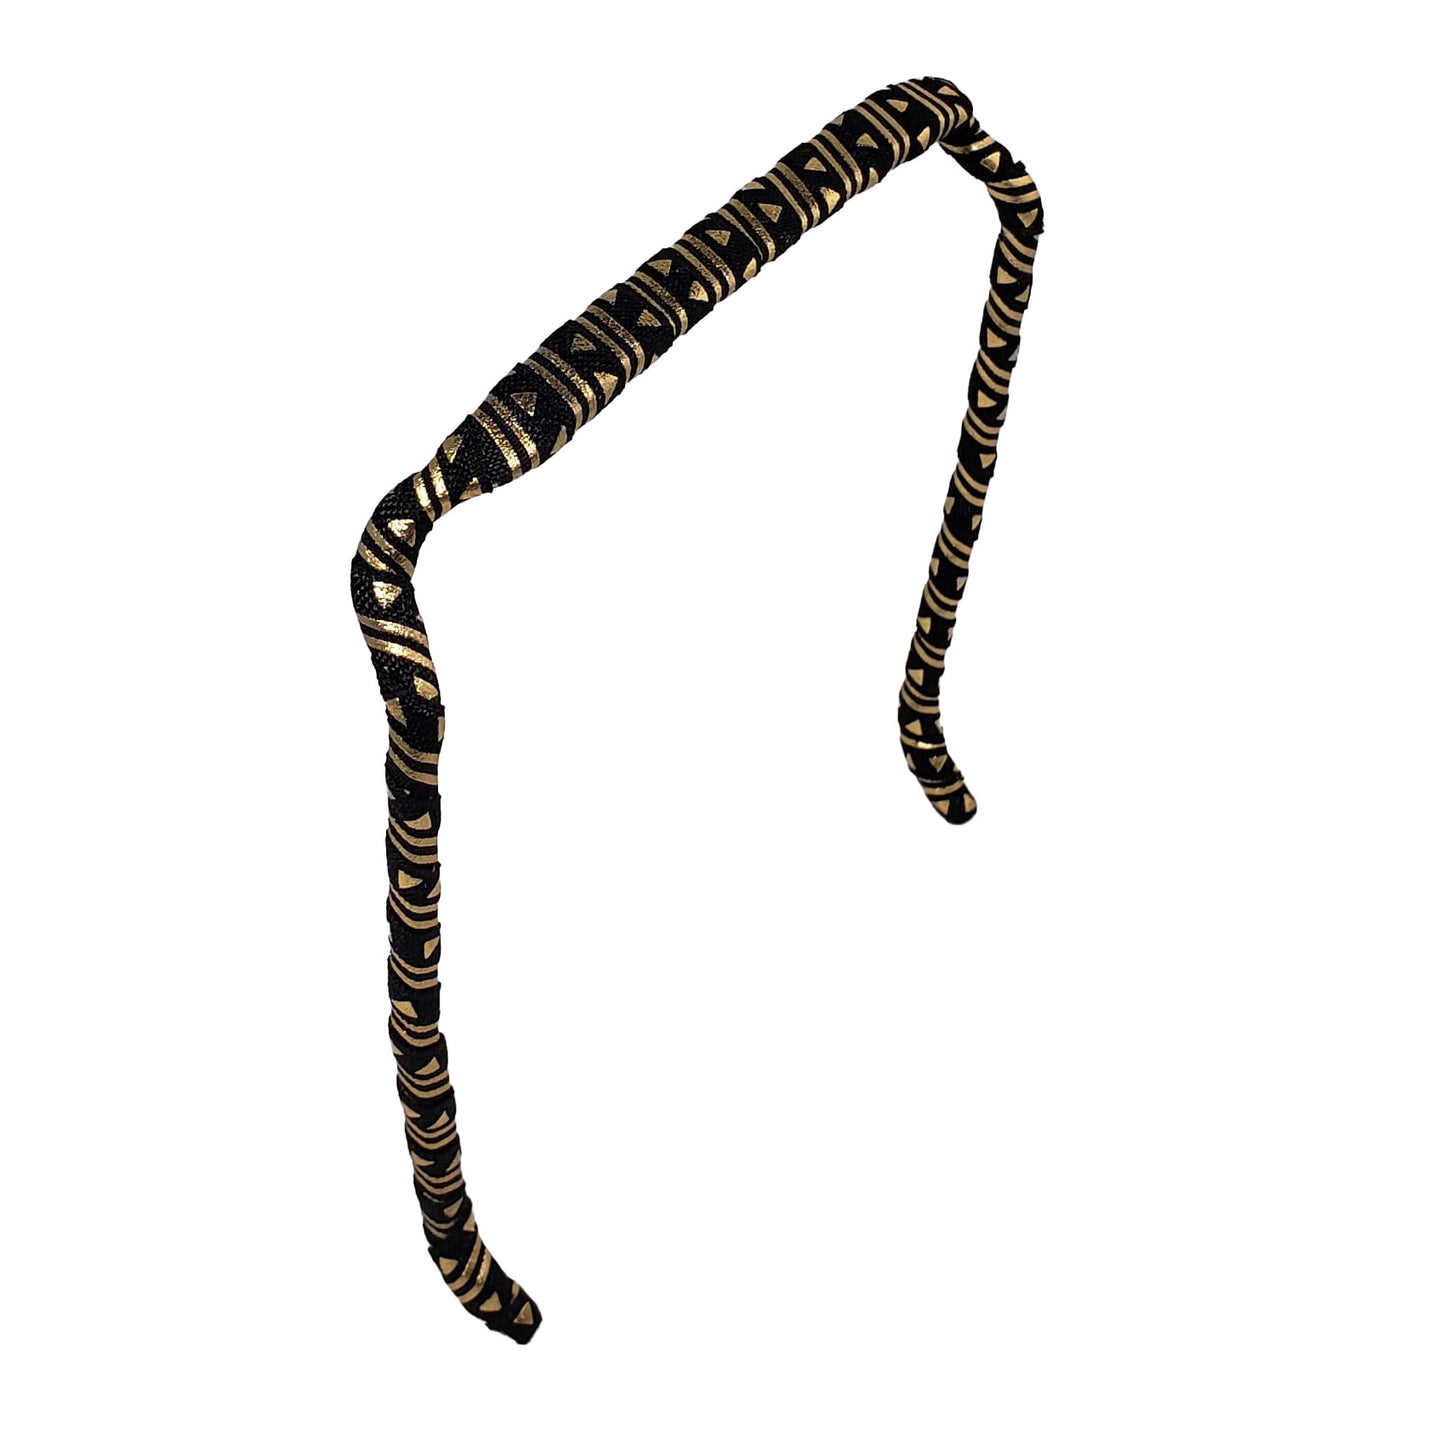 Black and Gold Aztec Headband - Zazzy Bandz - hair accessory - curly hair